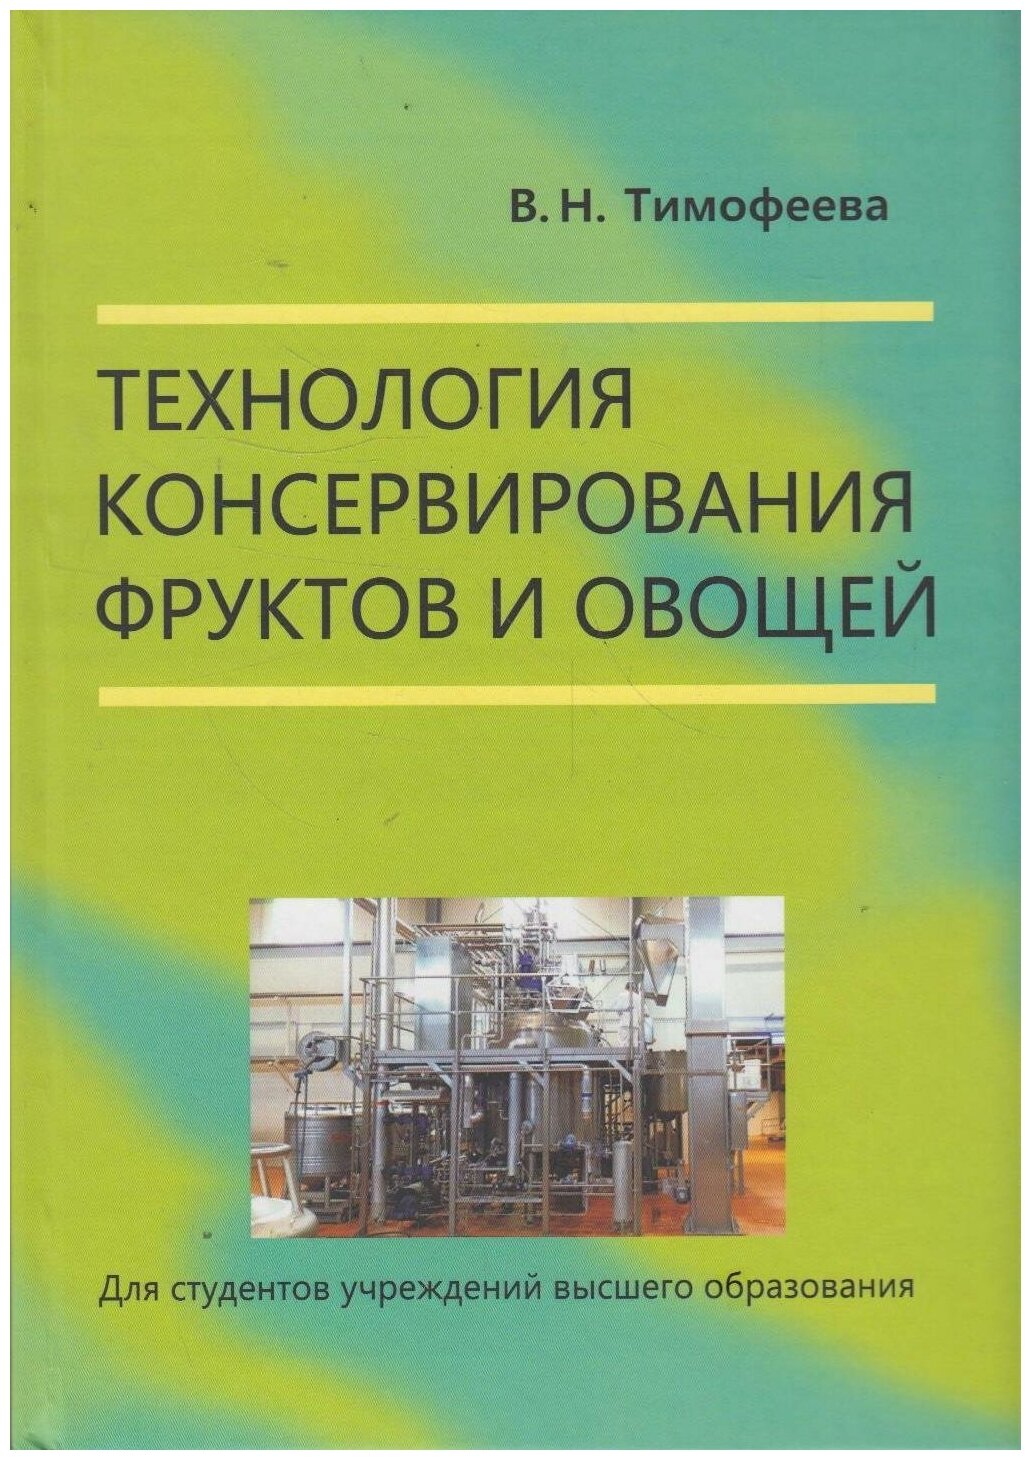 Книга: Технология консервирования фруктов и овощей / Тимофеева В. Н.